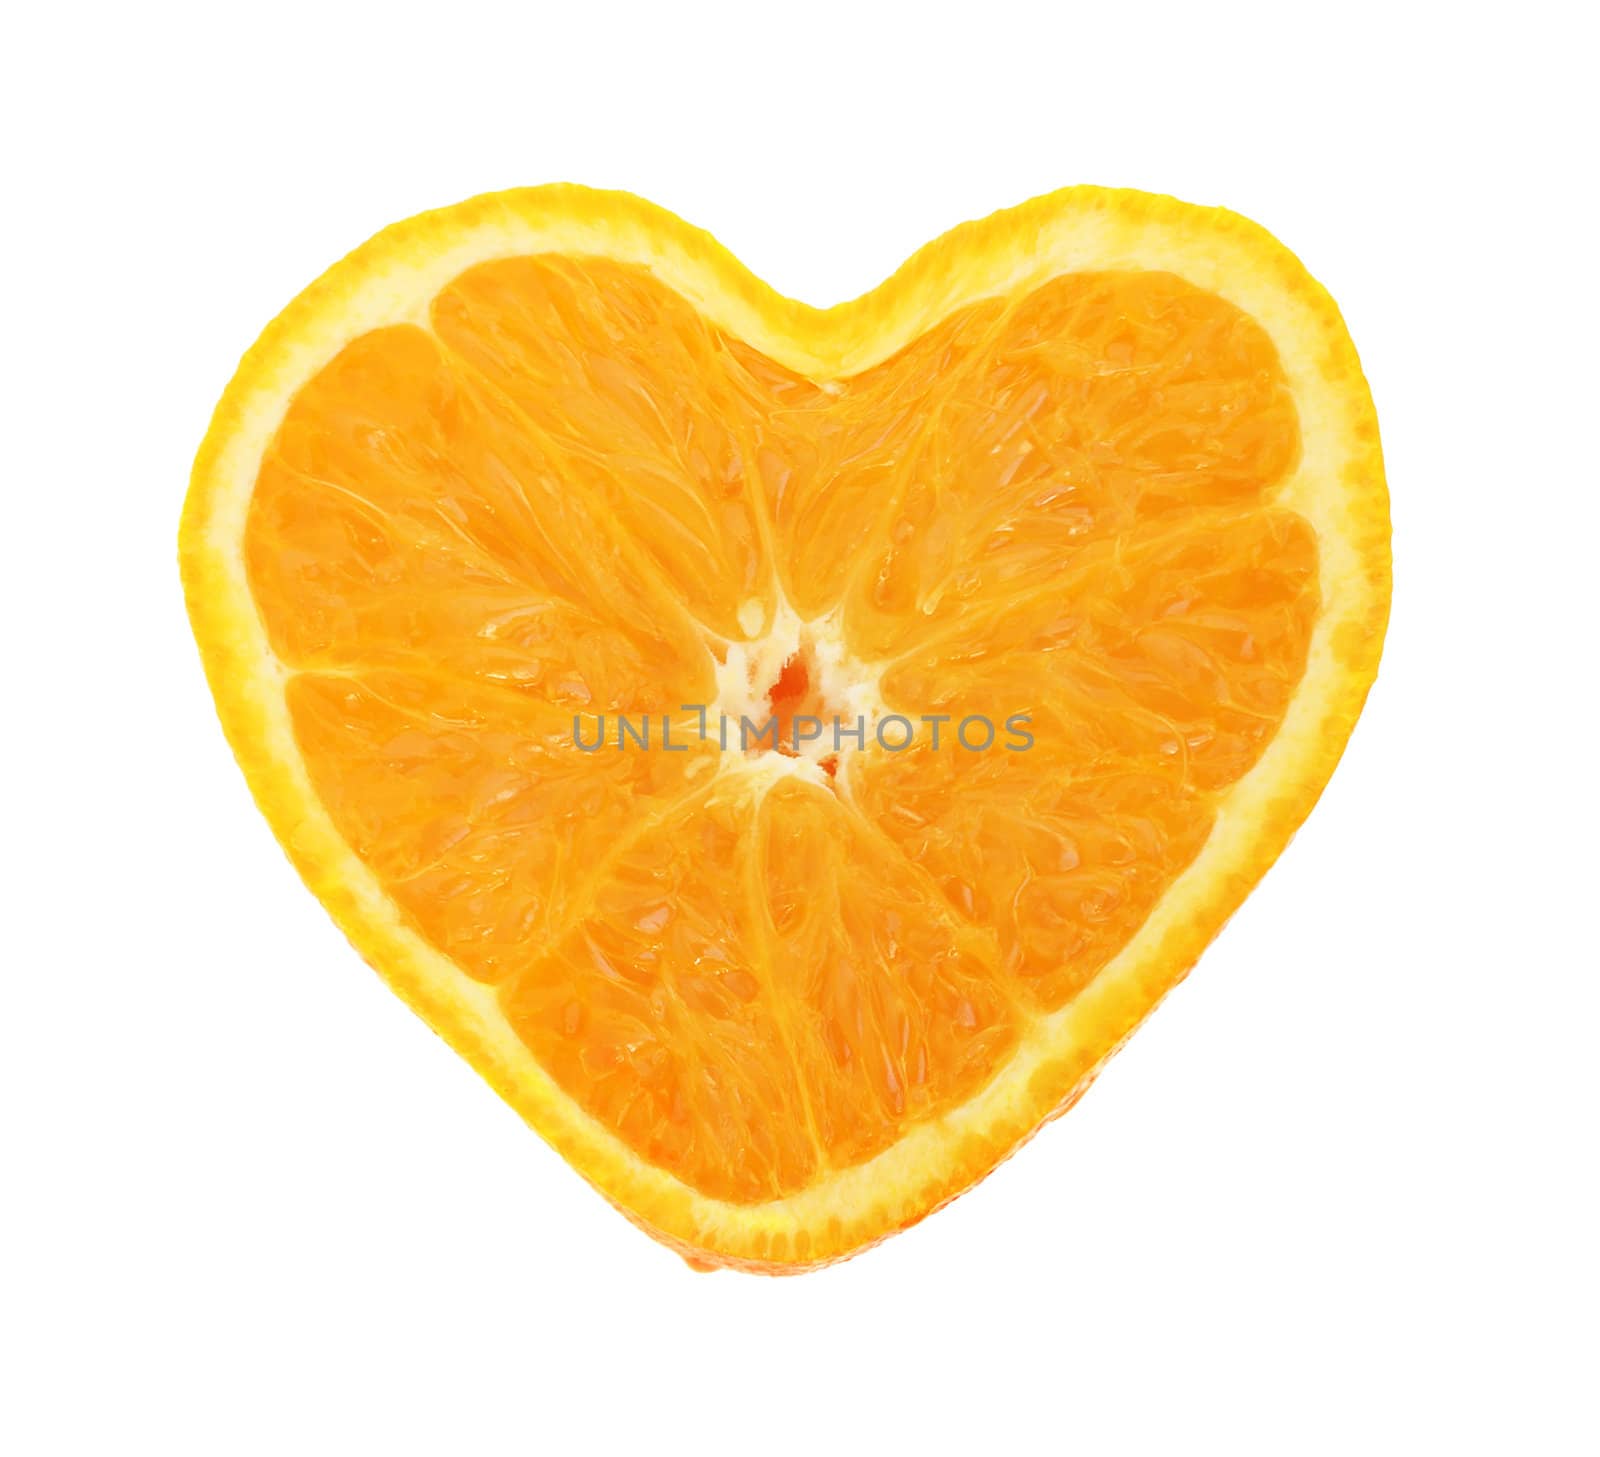 Orange cross section shaped like heart on white background